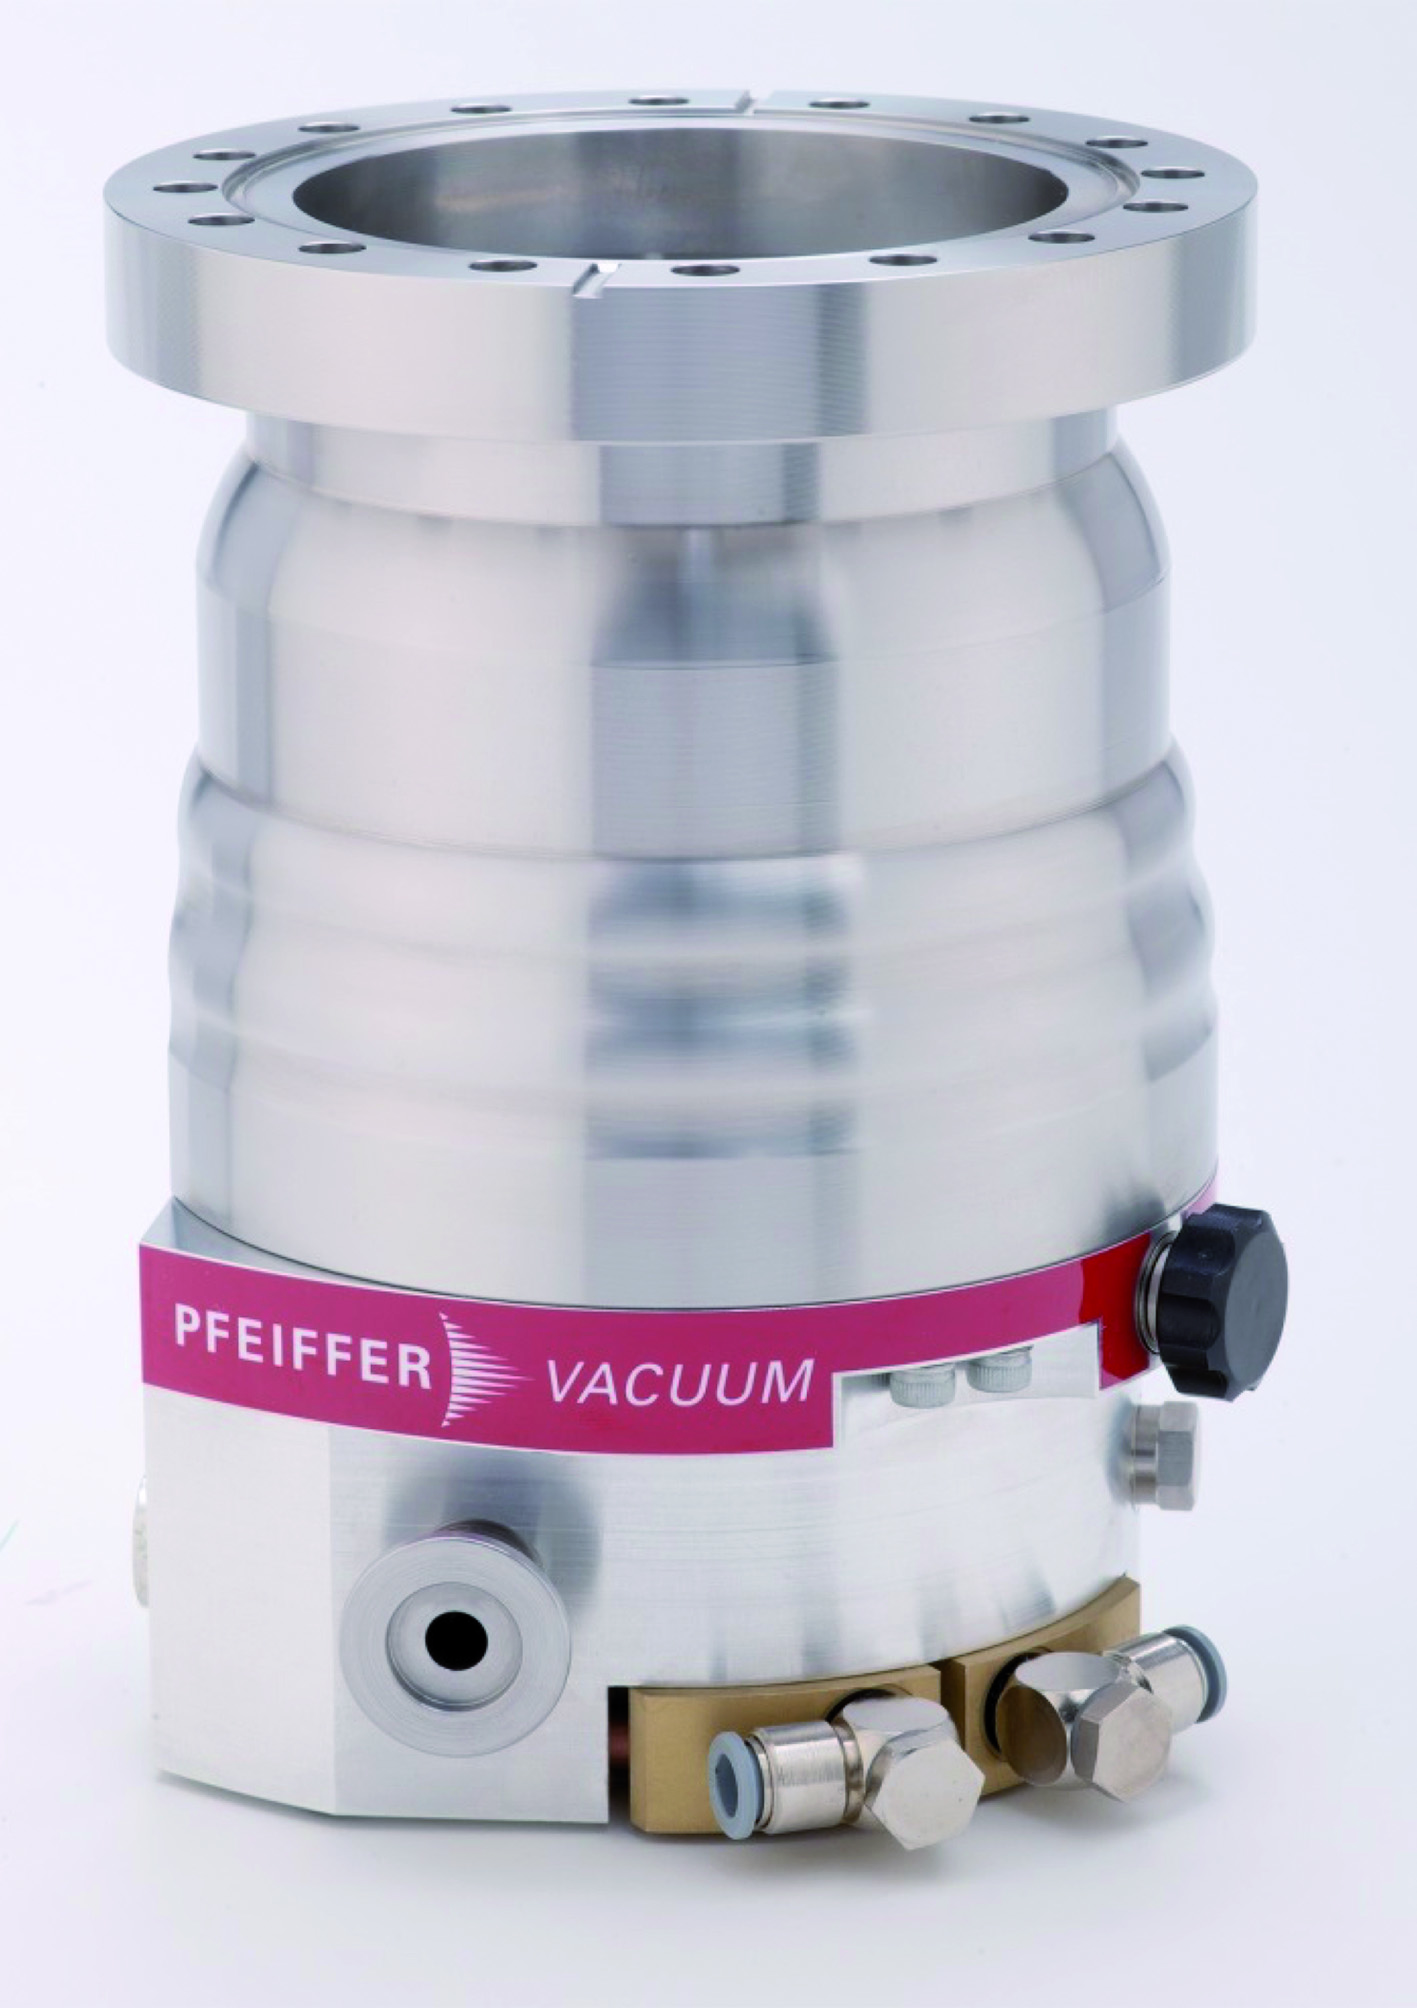 Pfeiffer Vacuum HiPace turbopumps.